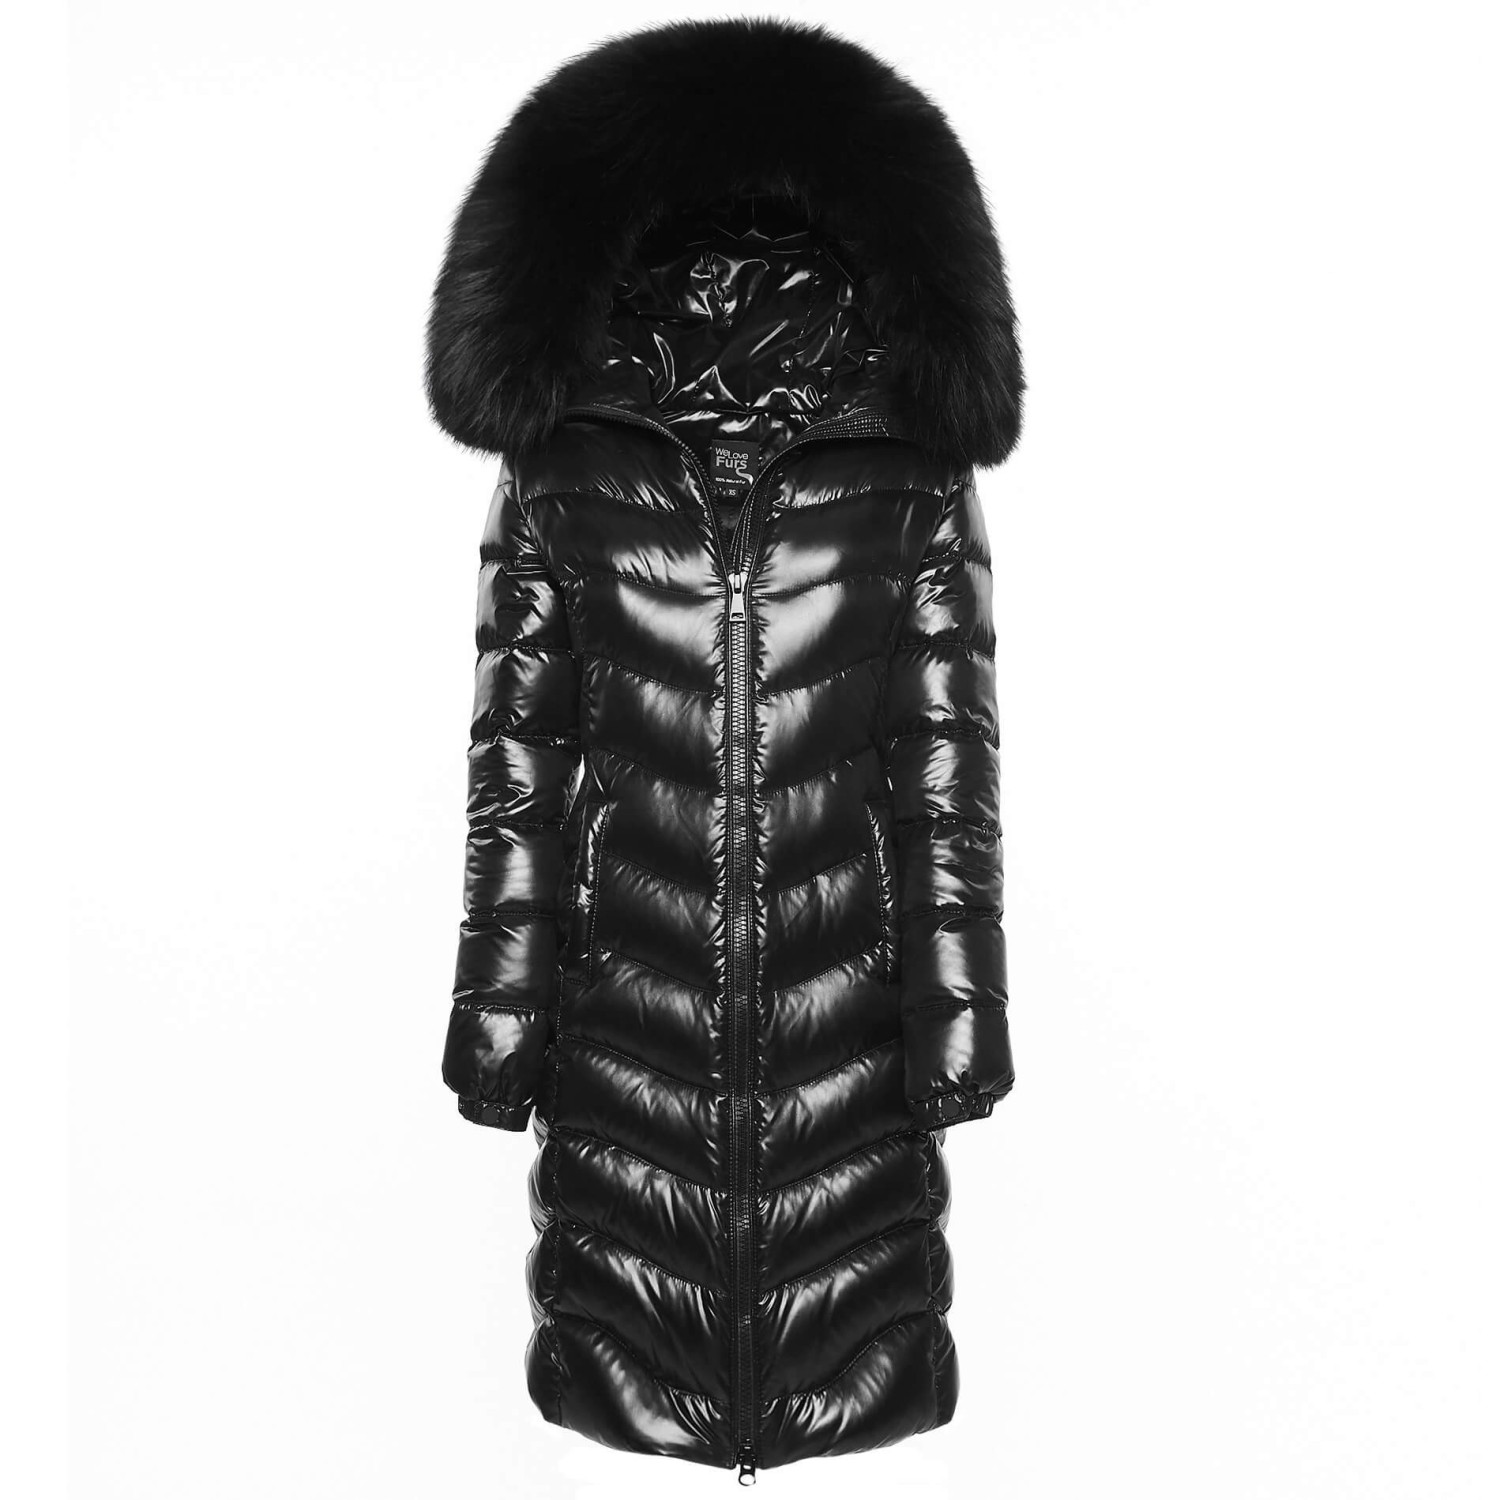 Long puffer coat with fur